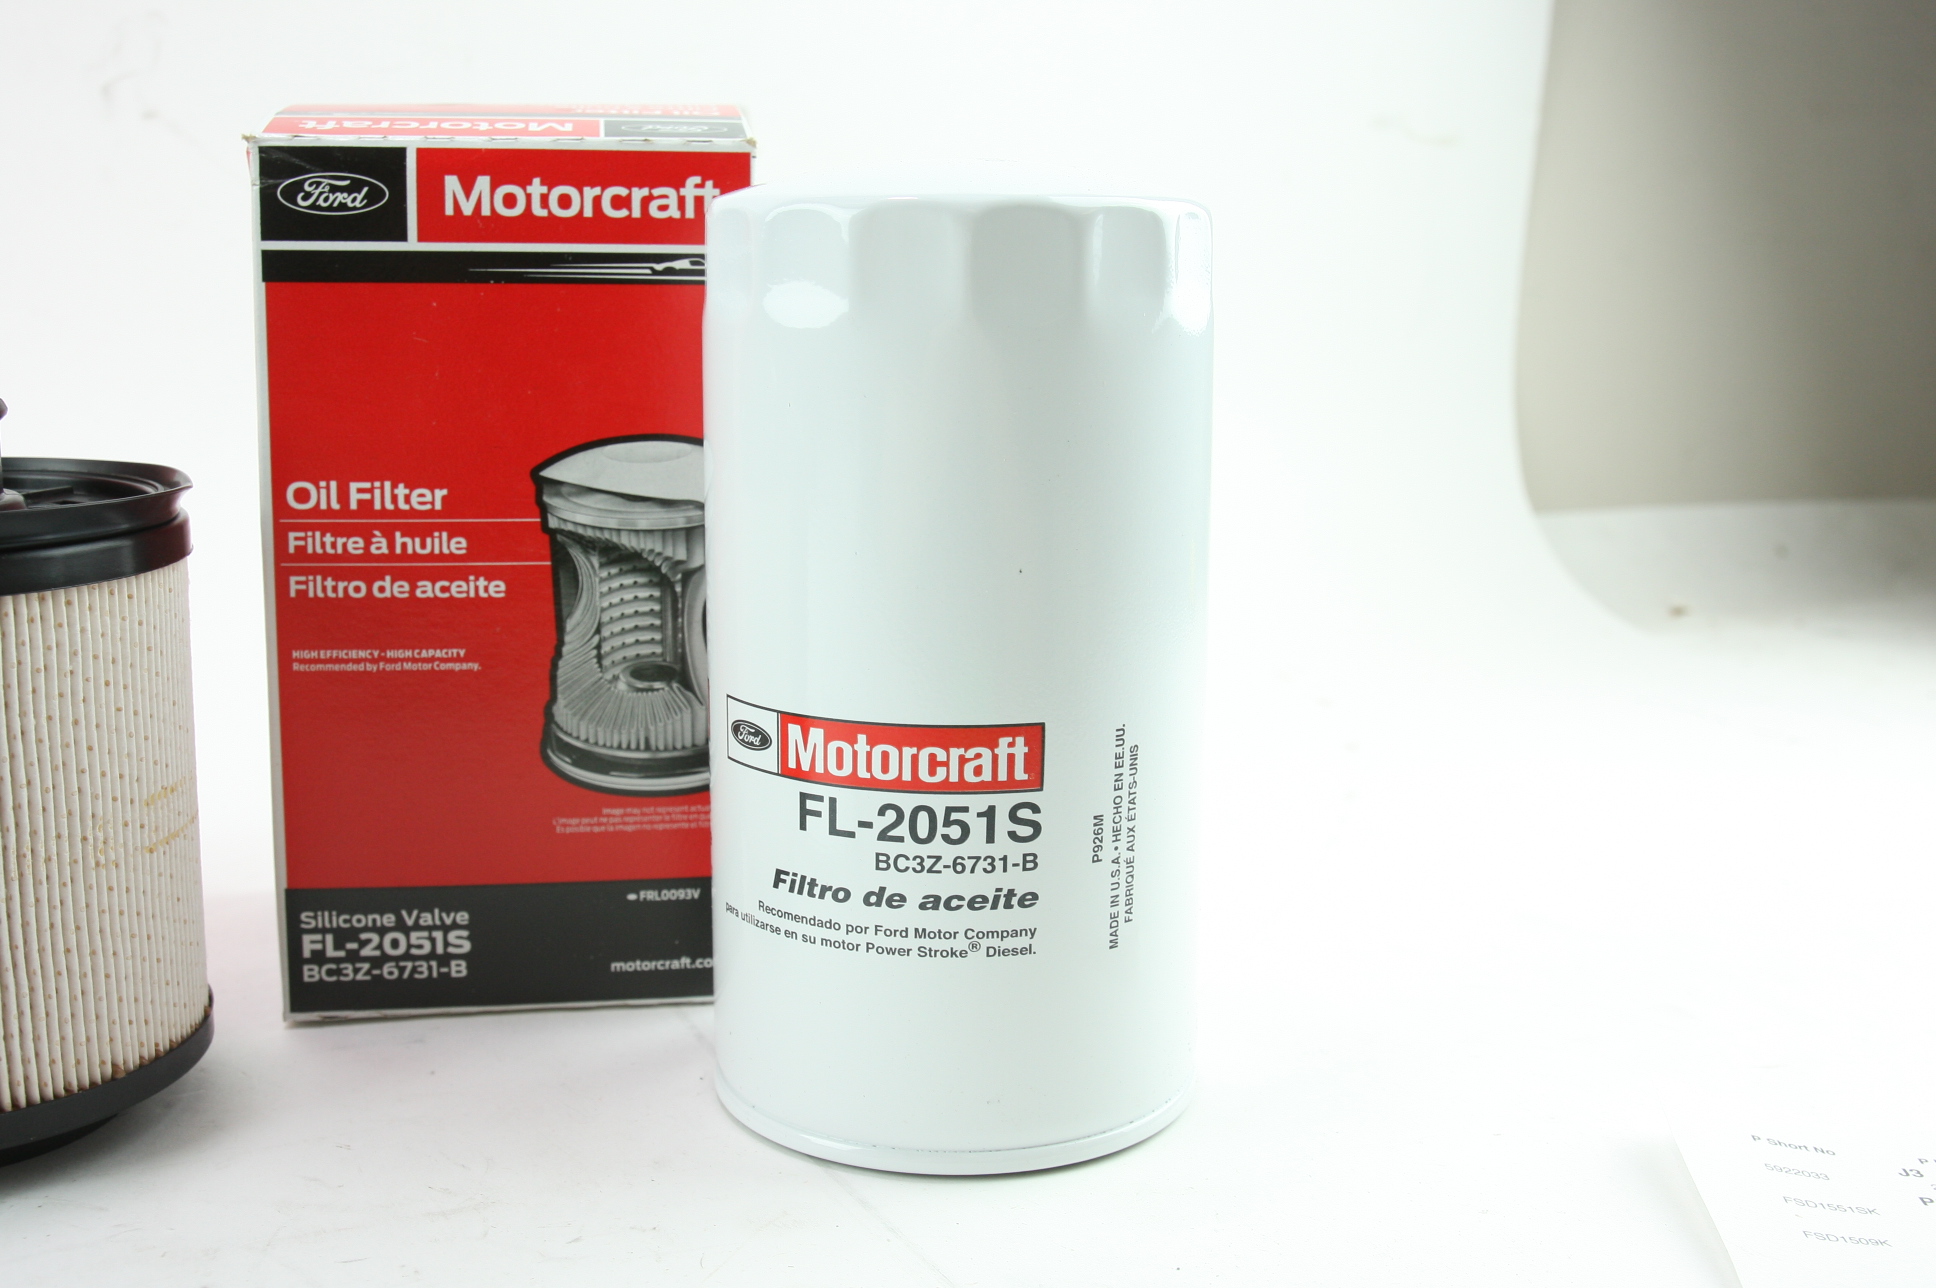 Diesel Fuel & Oil Filter Kit Motorcraft FD4615 FL2051S Genuine OEM Ford Filters - image 5